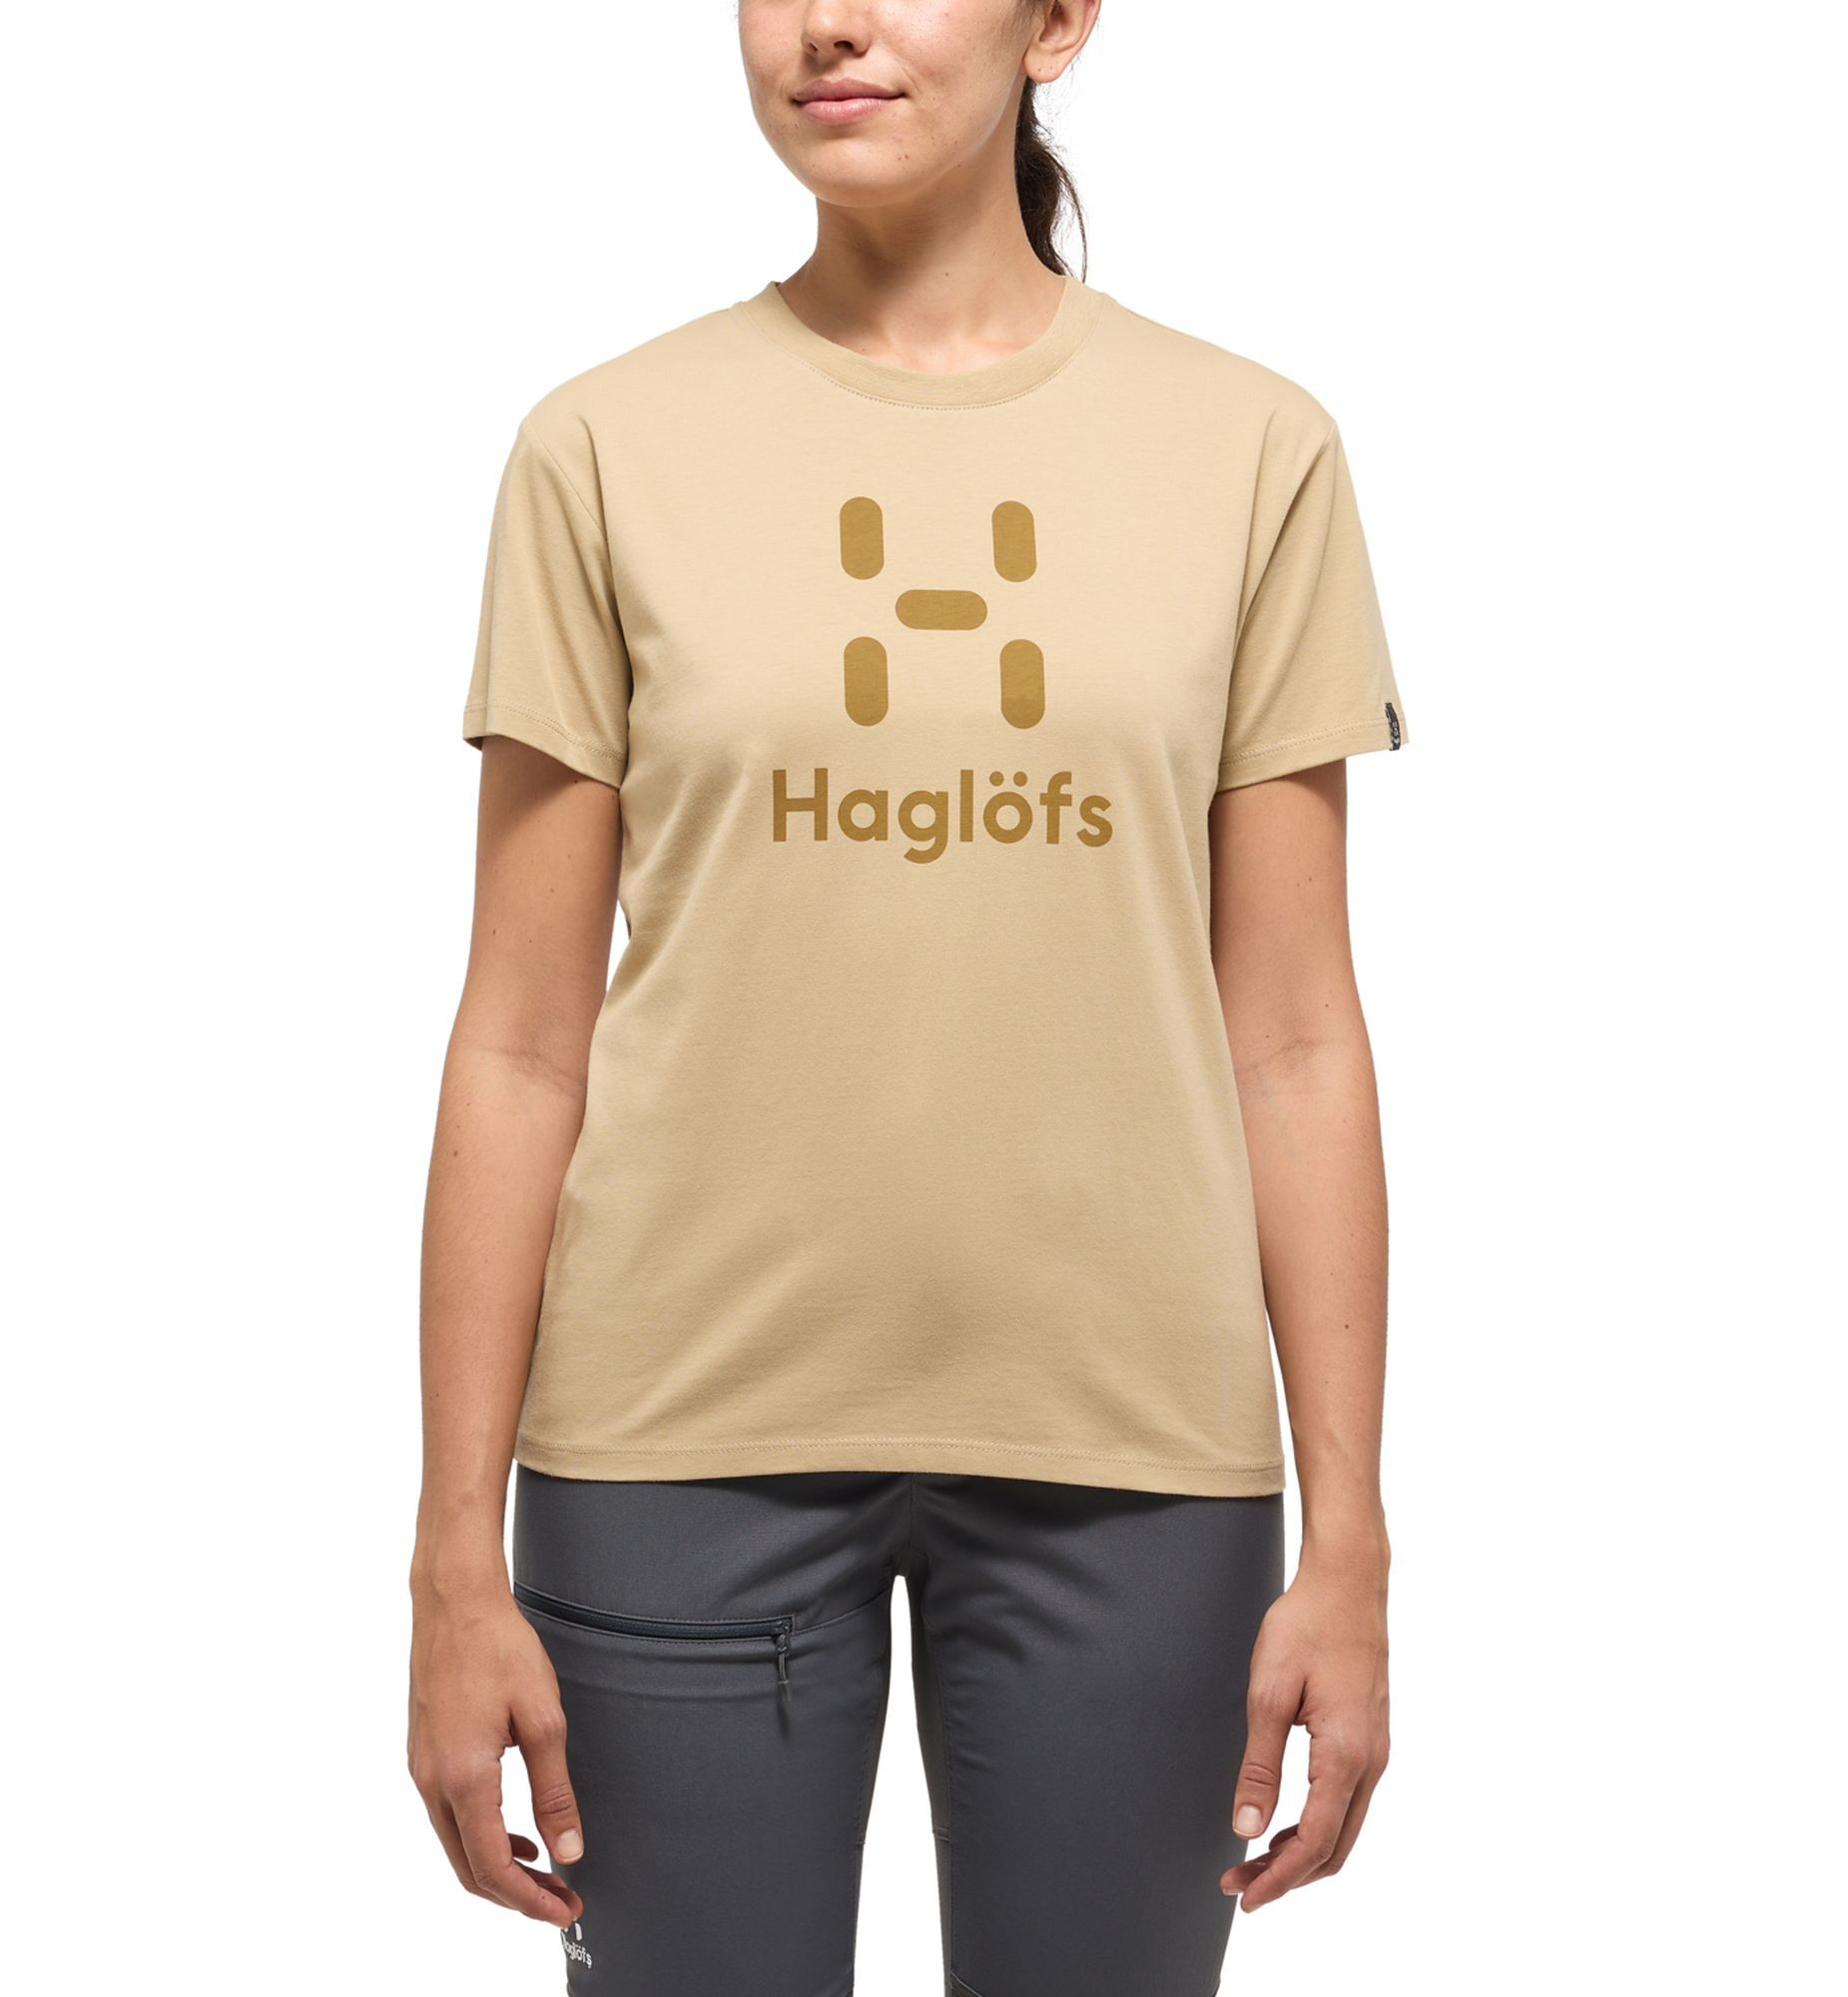 Haglöfs Camp Tee Women - T-shirt - Women's | Hardloop